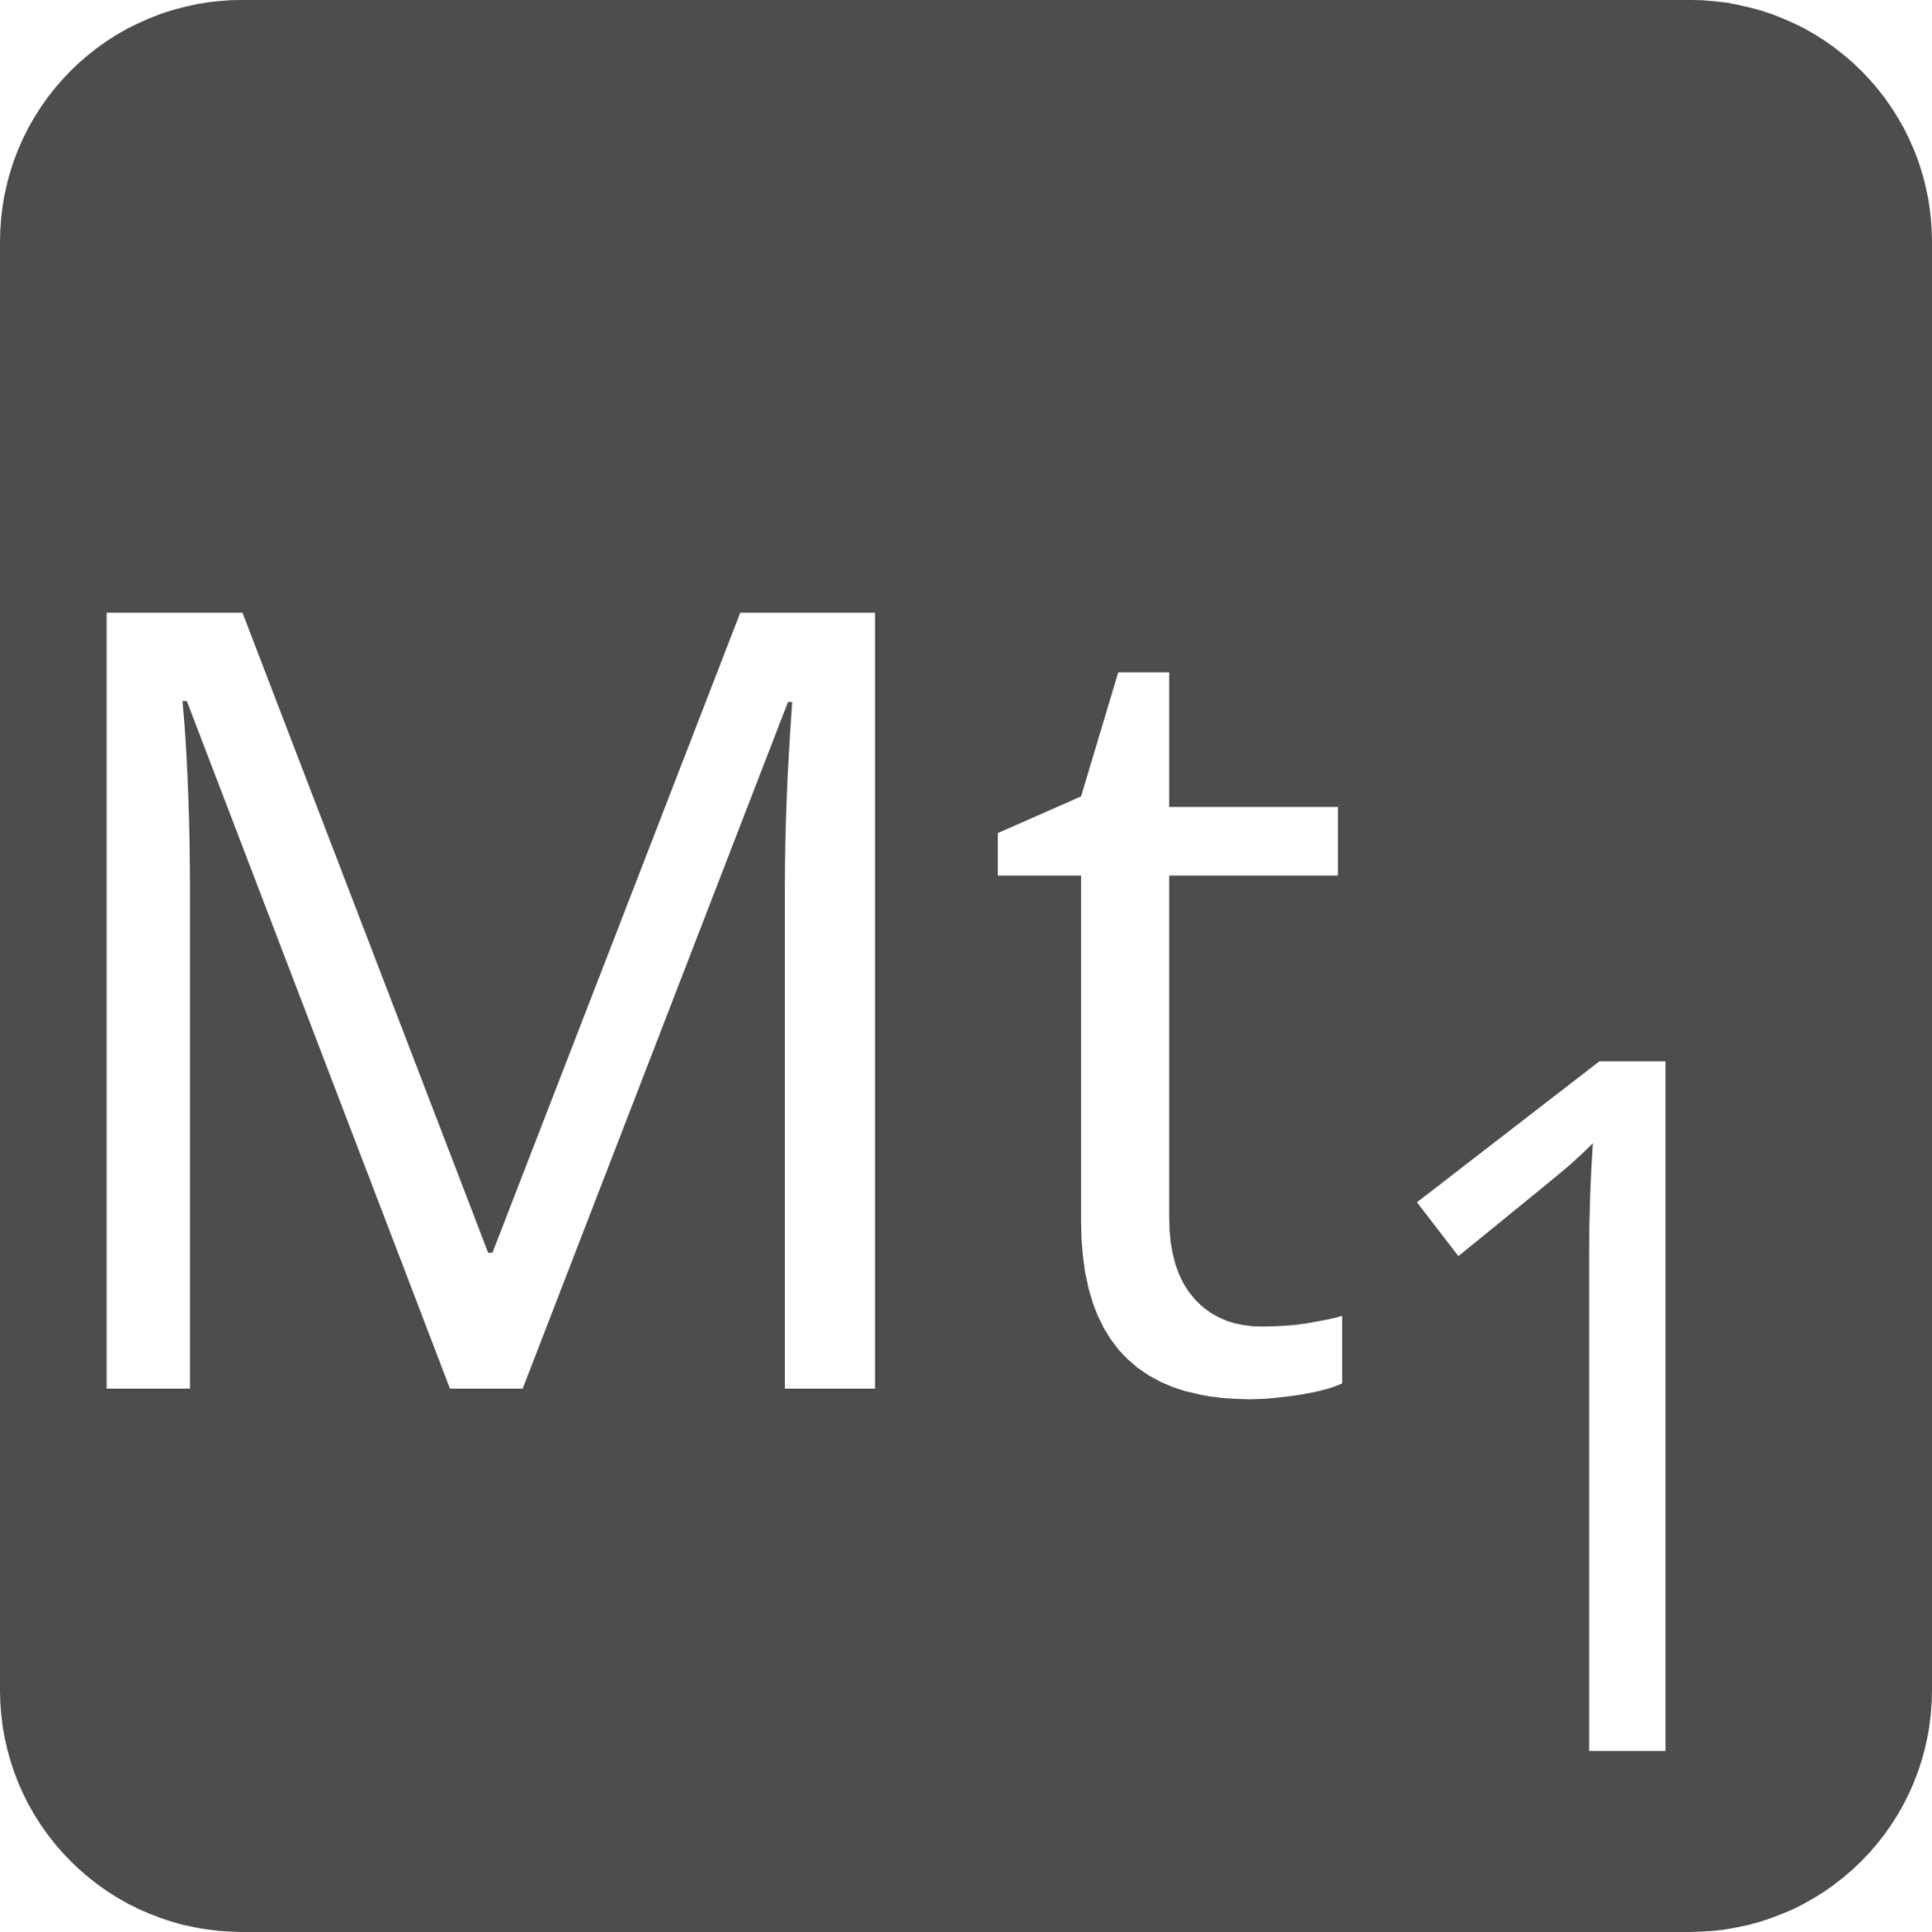 indicator keyboard Mt 1 icon